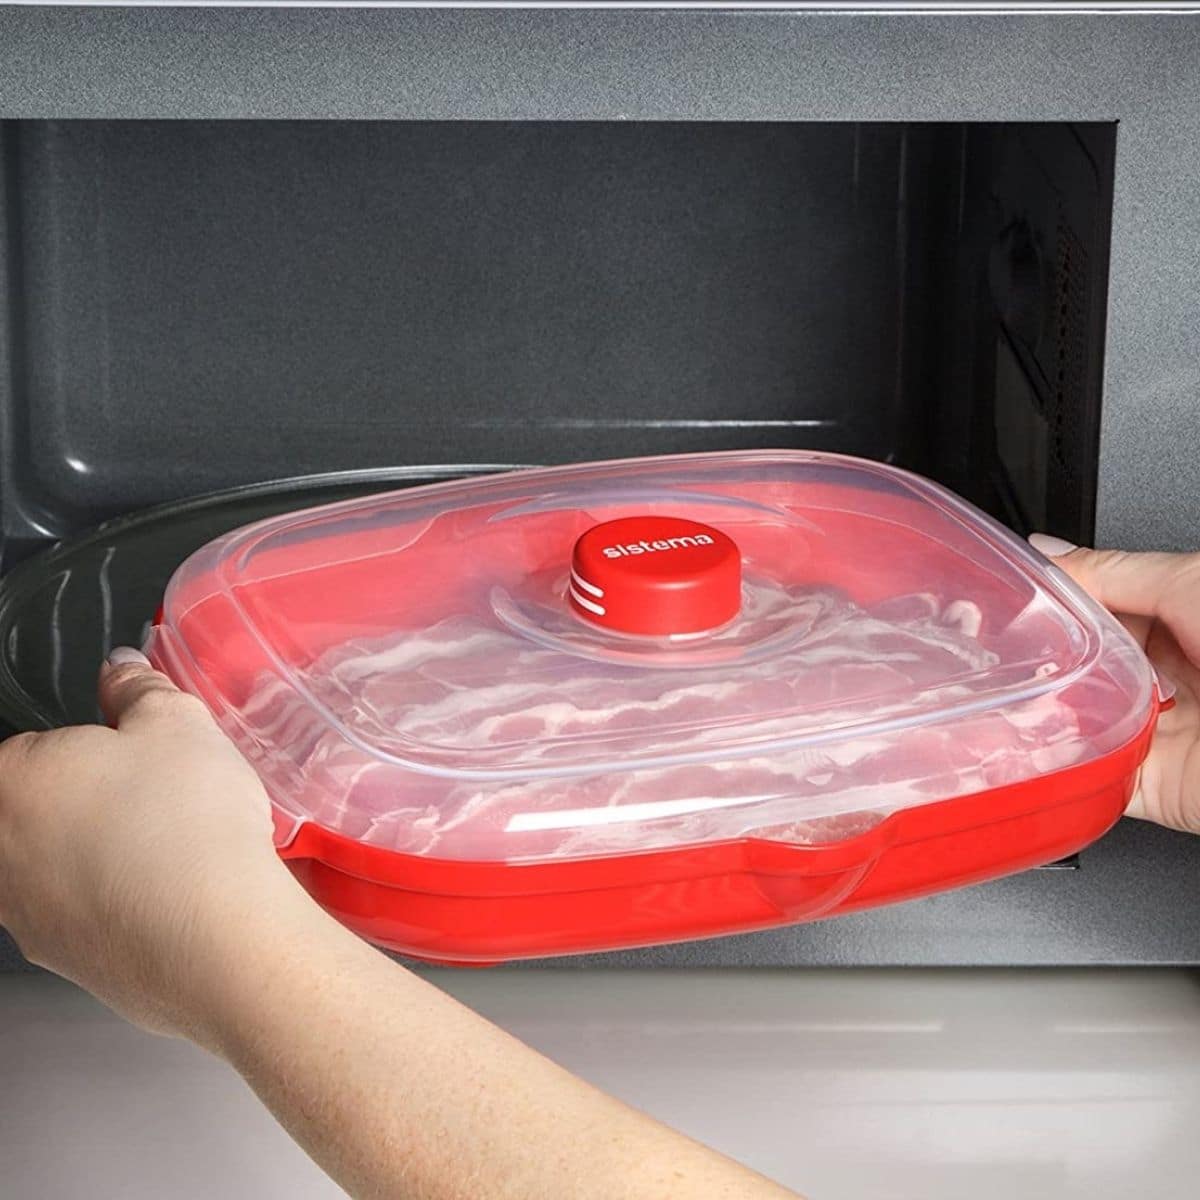 Microwave Bacon Cooker Rack, Grill Crisper Tray 8.5”- White - Ecolution